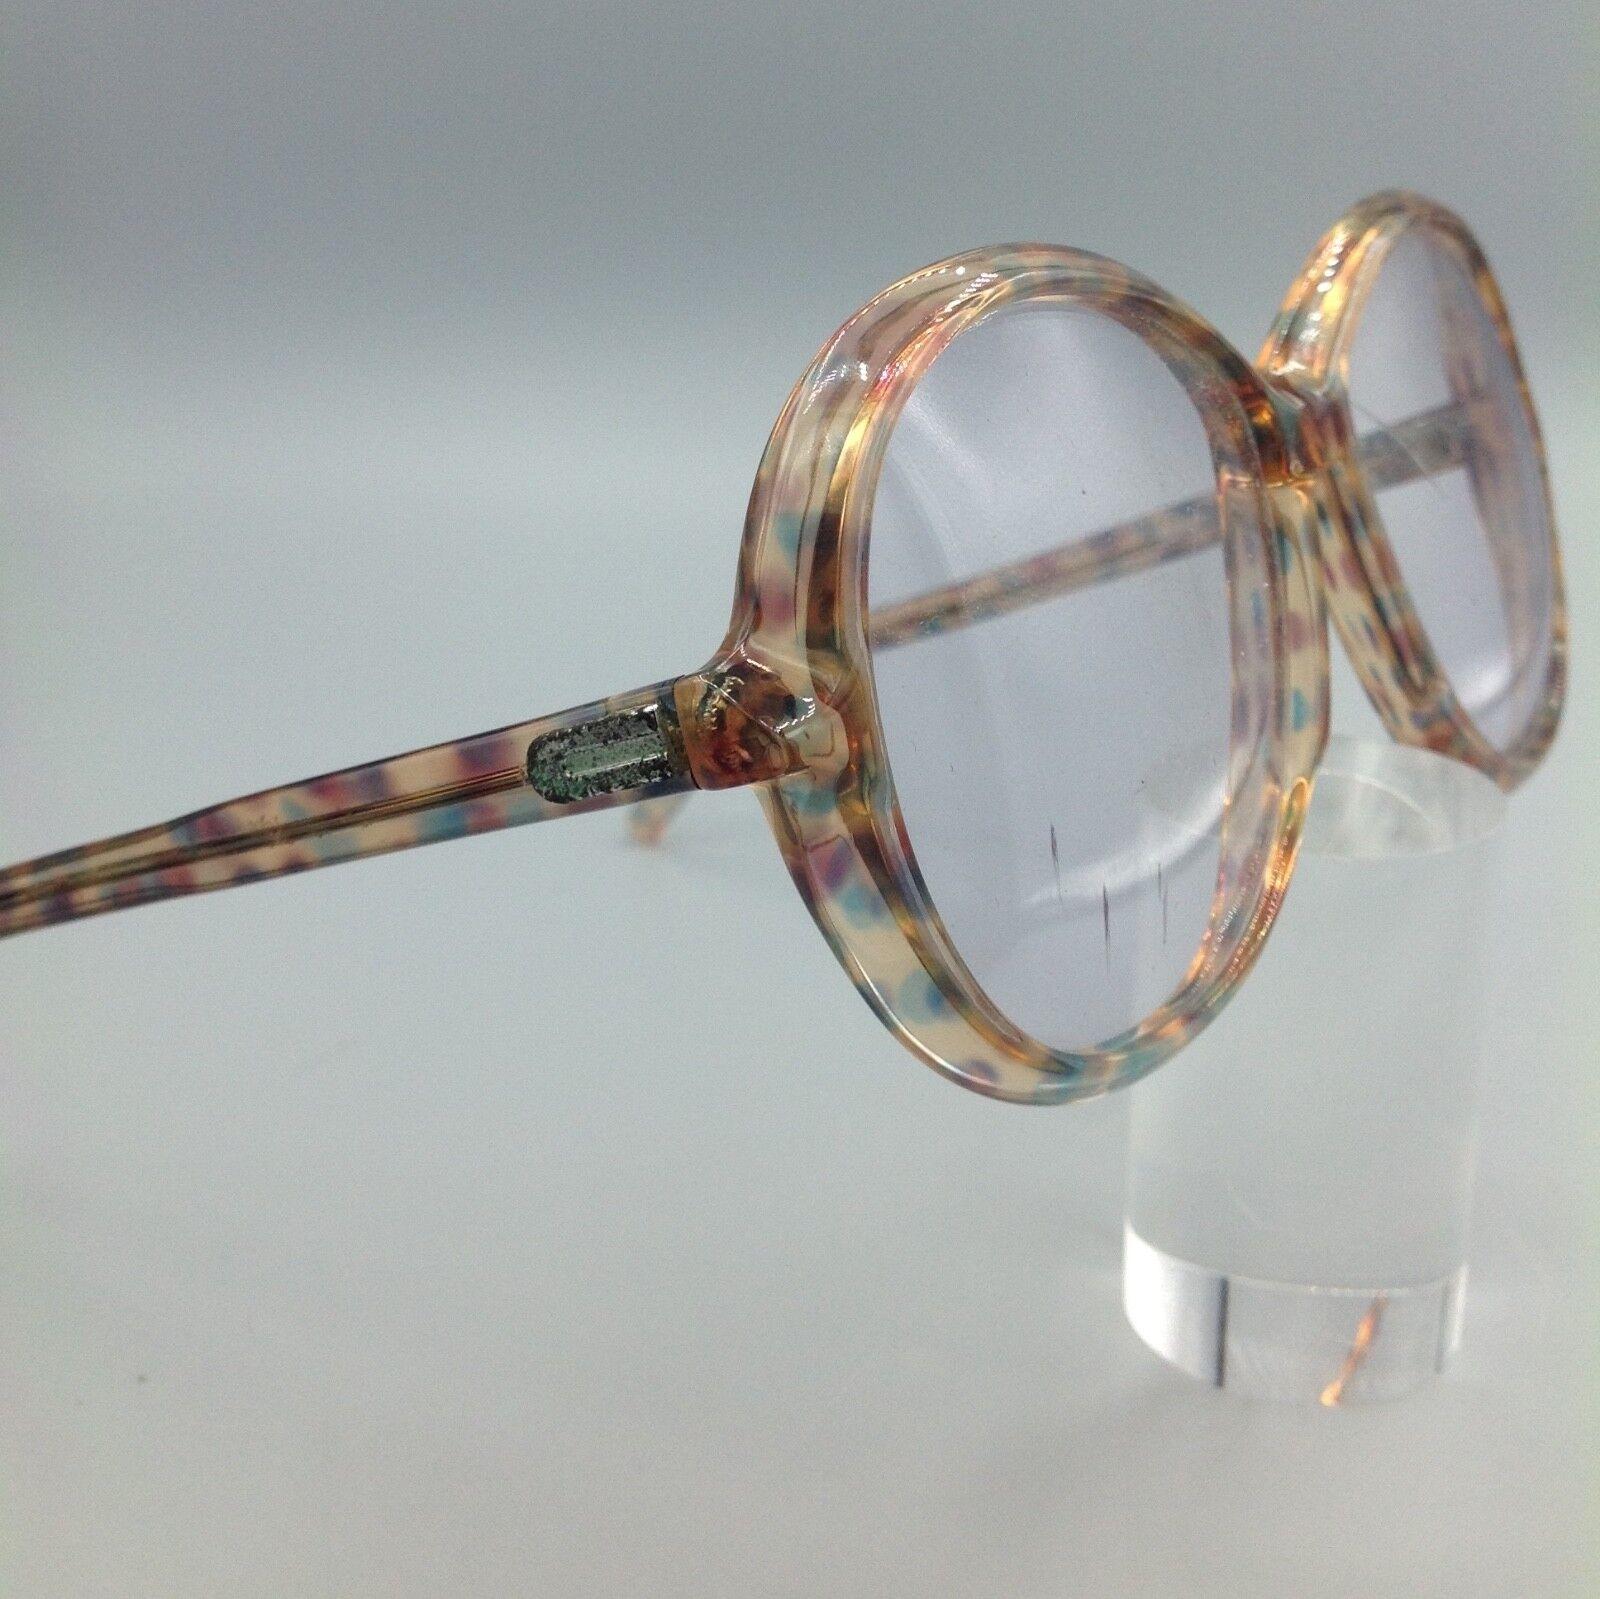 Silhouette occhiale Frame mode 53 col 203 eyewear vintage brillen lunettes gafas 60s